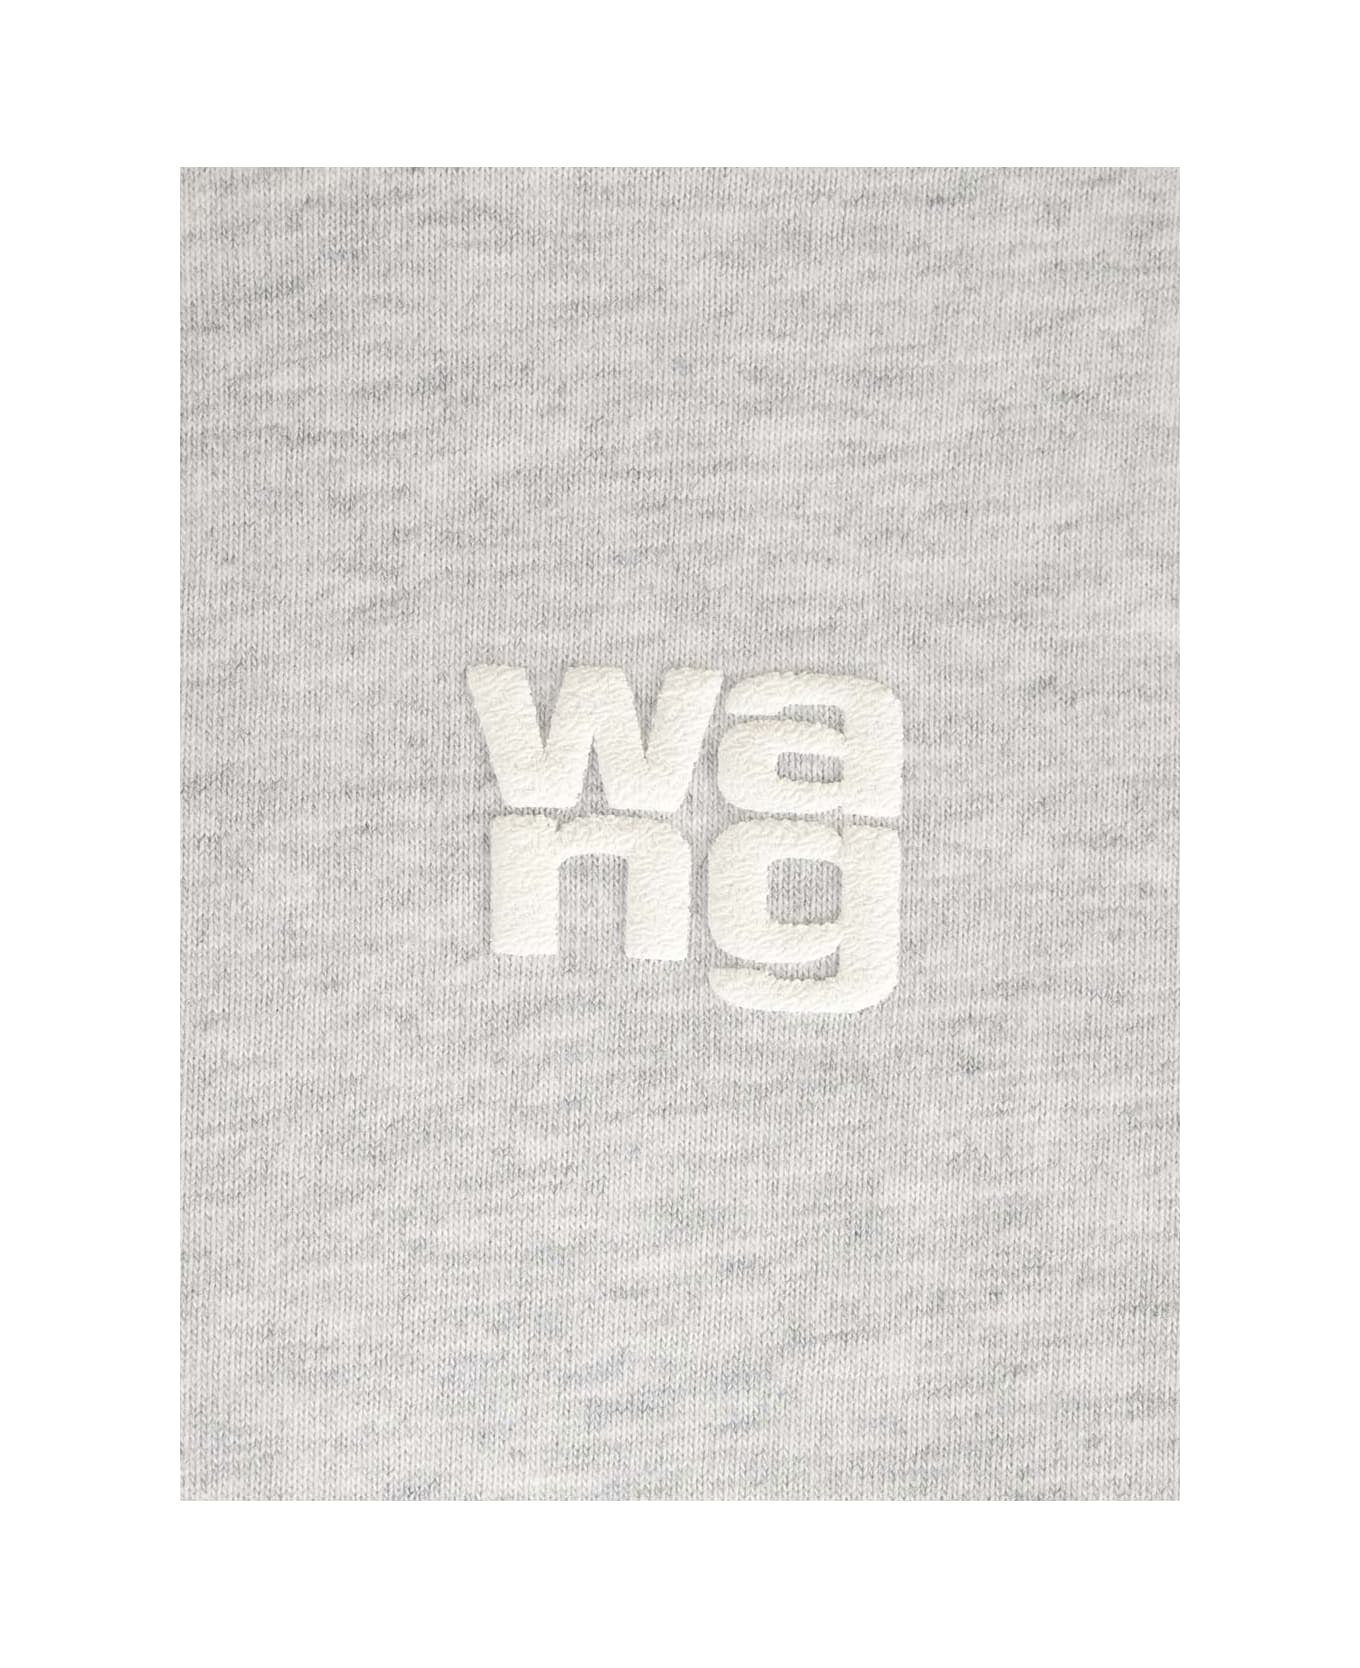 Alexander Wang 'essential' Grey T-shirt - Light Heather Grey Tシャツ